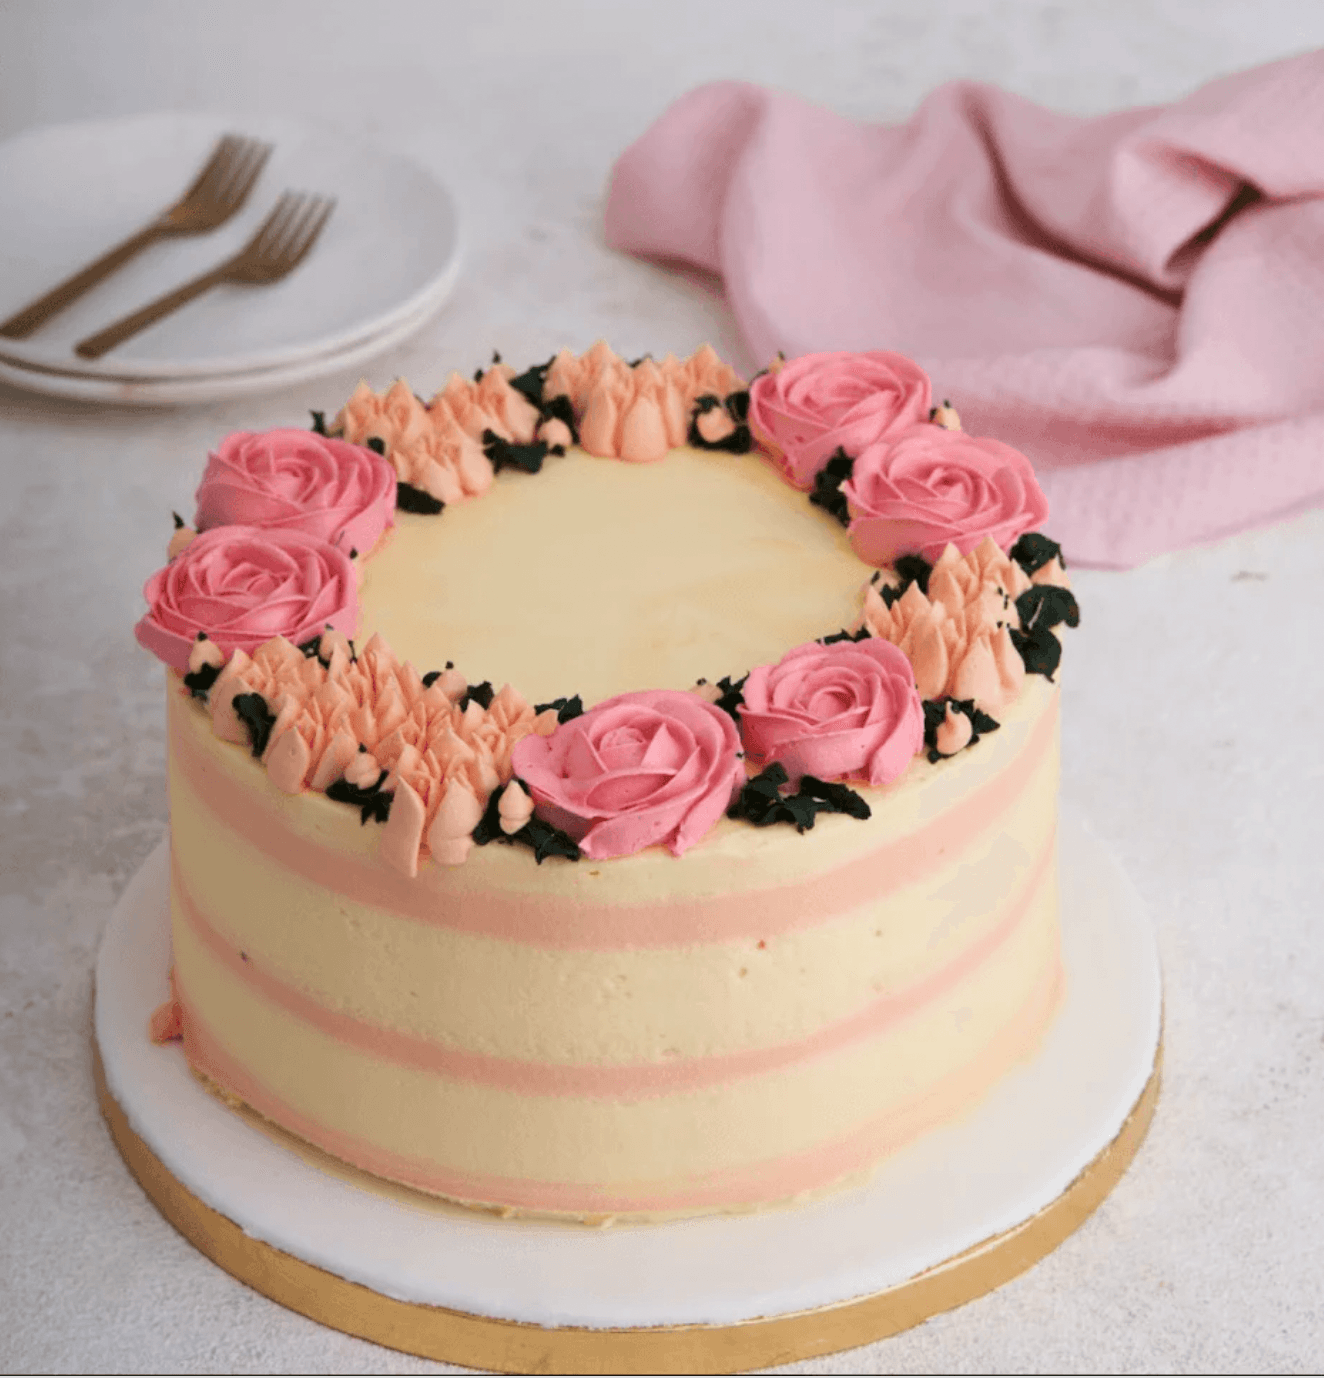 Buttercream iced wedding cake with fresh flowers - - CakesDecor